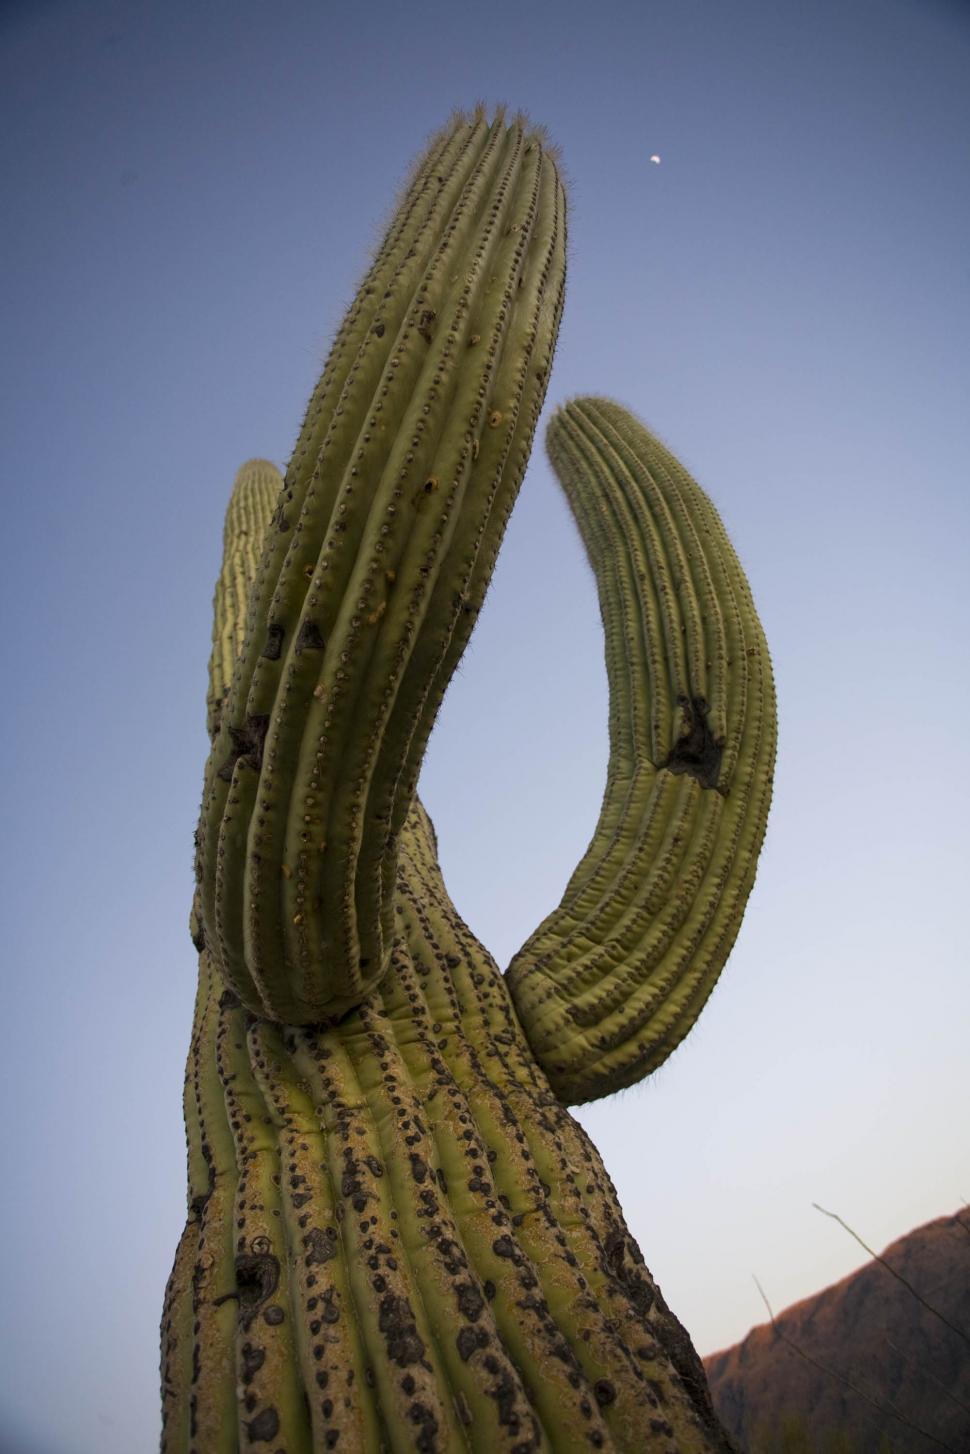 Free Image of Saguaro Cactus 